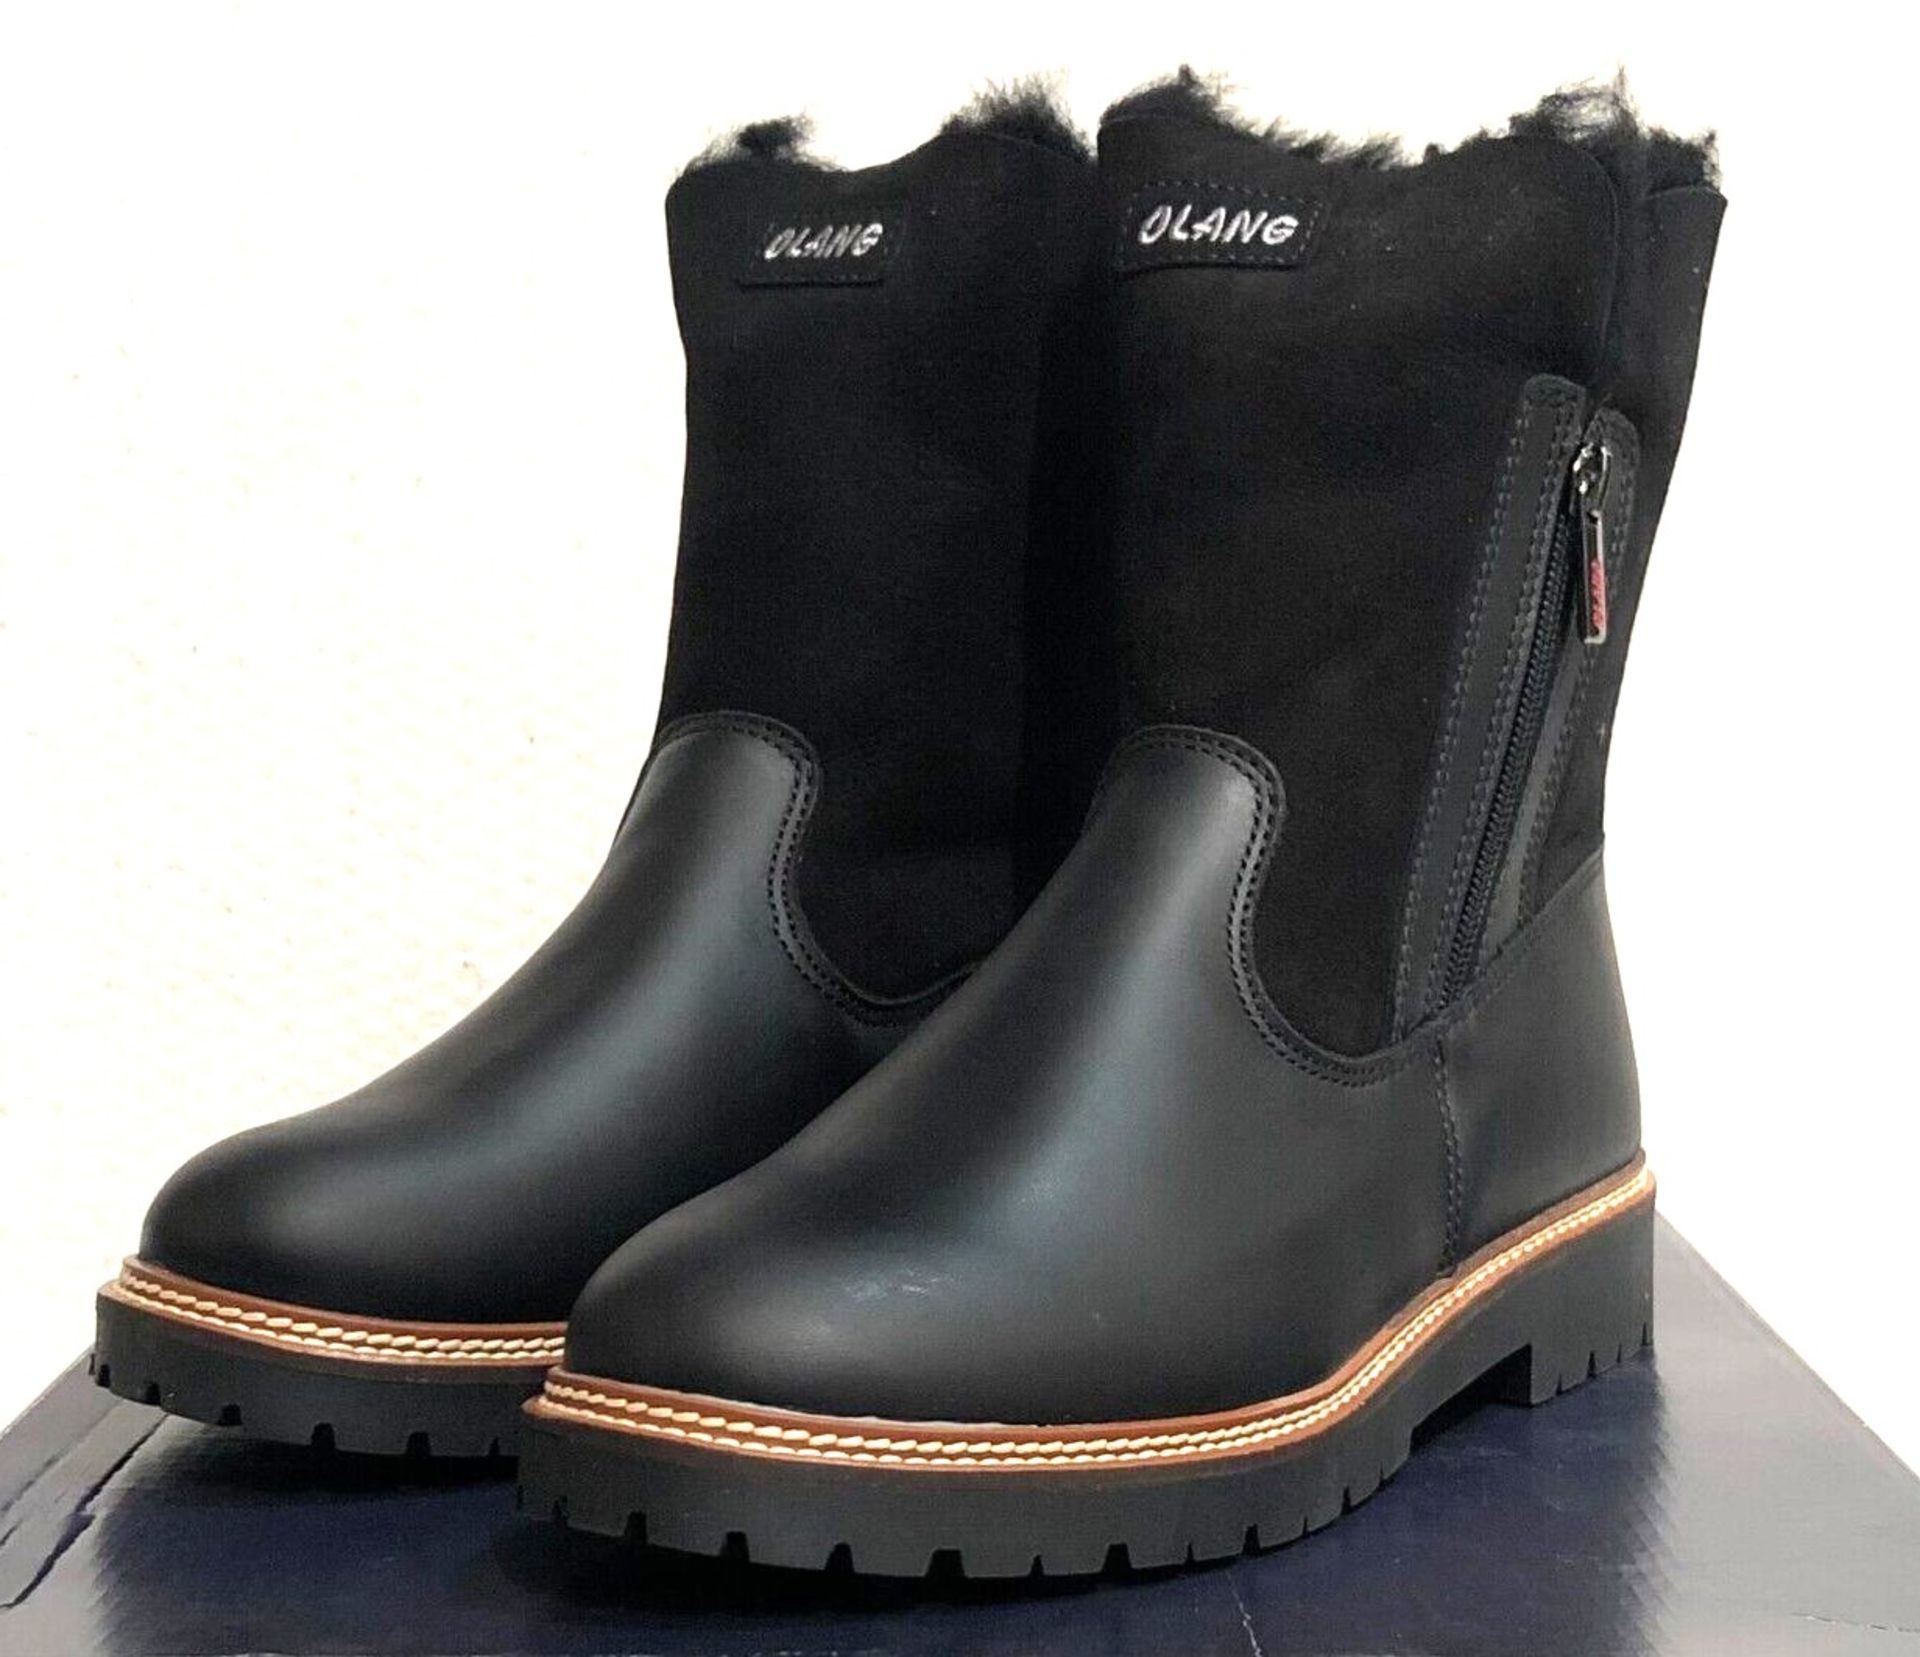 1 x Pair of Designer Olang Women's Winter Boots - Debora 81 Nero - Euro Size 37 - New Boxed - Image 2 of 2